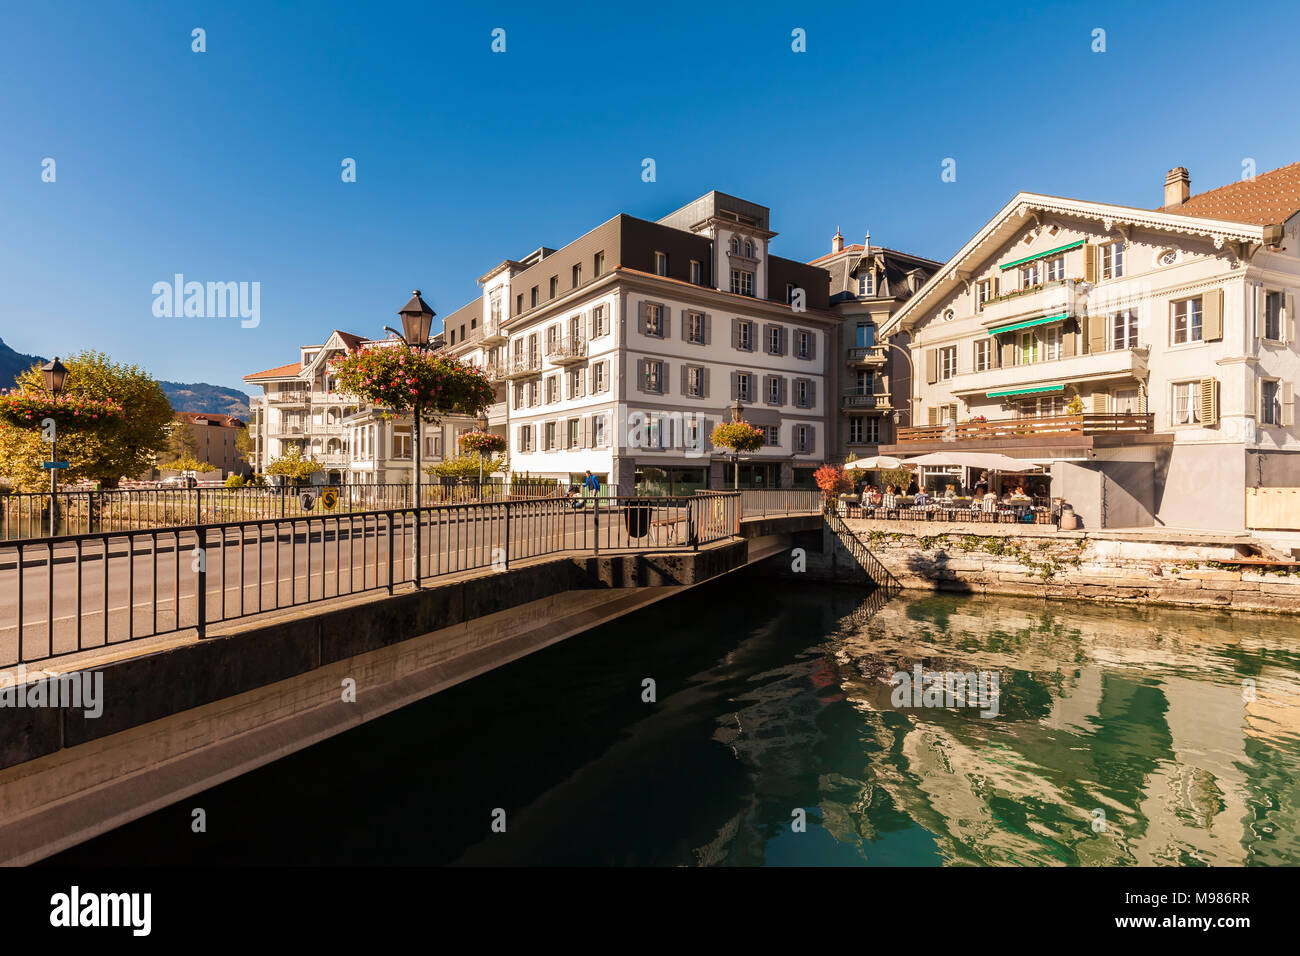 La Svizzera, Berna, Oberland bernese, Interlaken, centro storico, fiume Aare Foto Stock